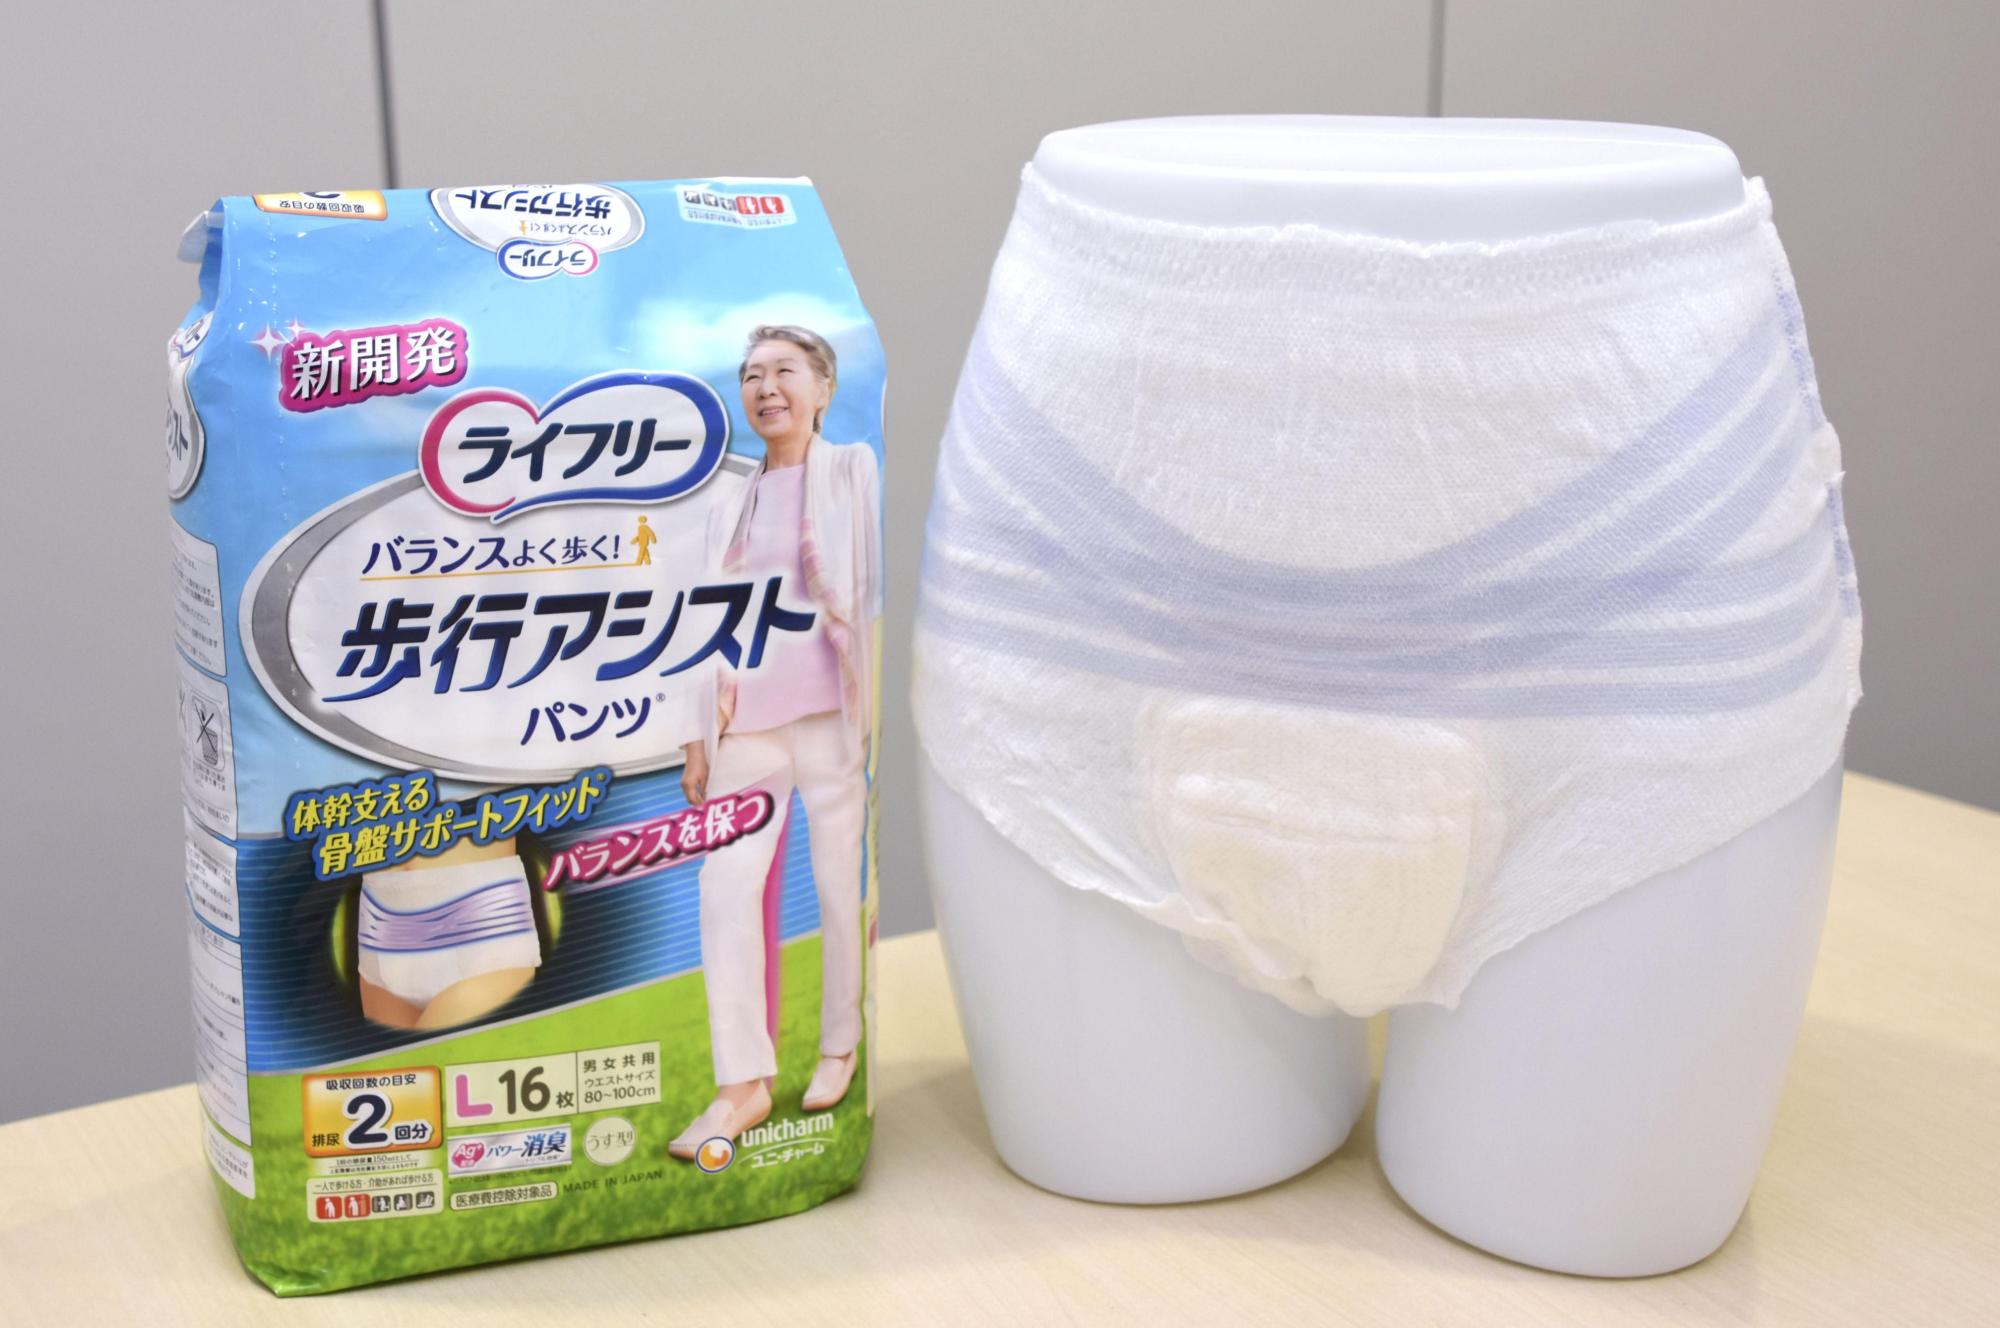 https://www.japantimes.co.jp/uploads/imported_images/uploads/2020/01/n-diapers-a-20200120.jpg